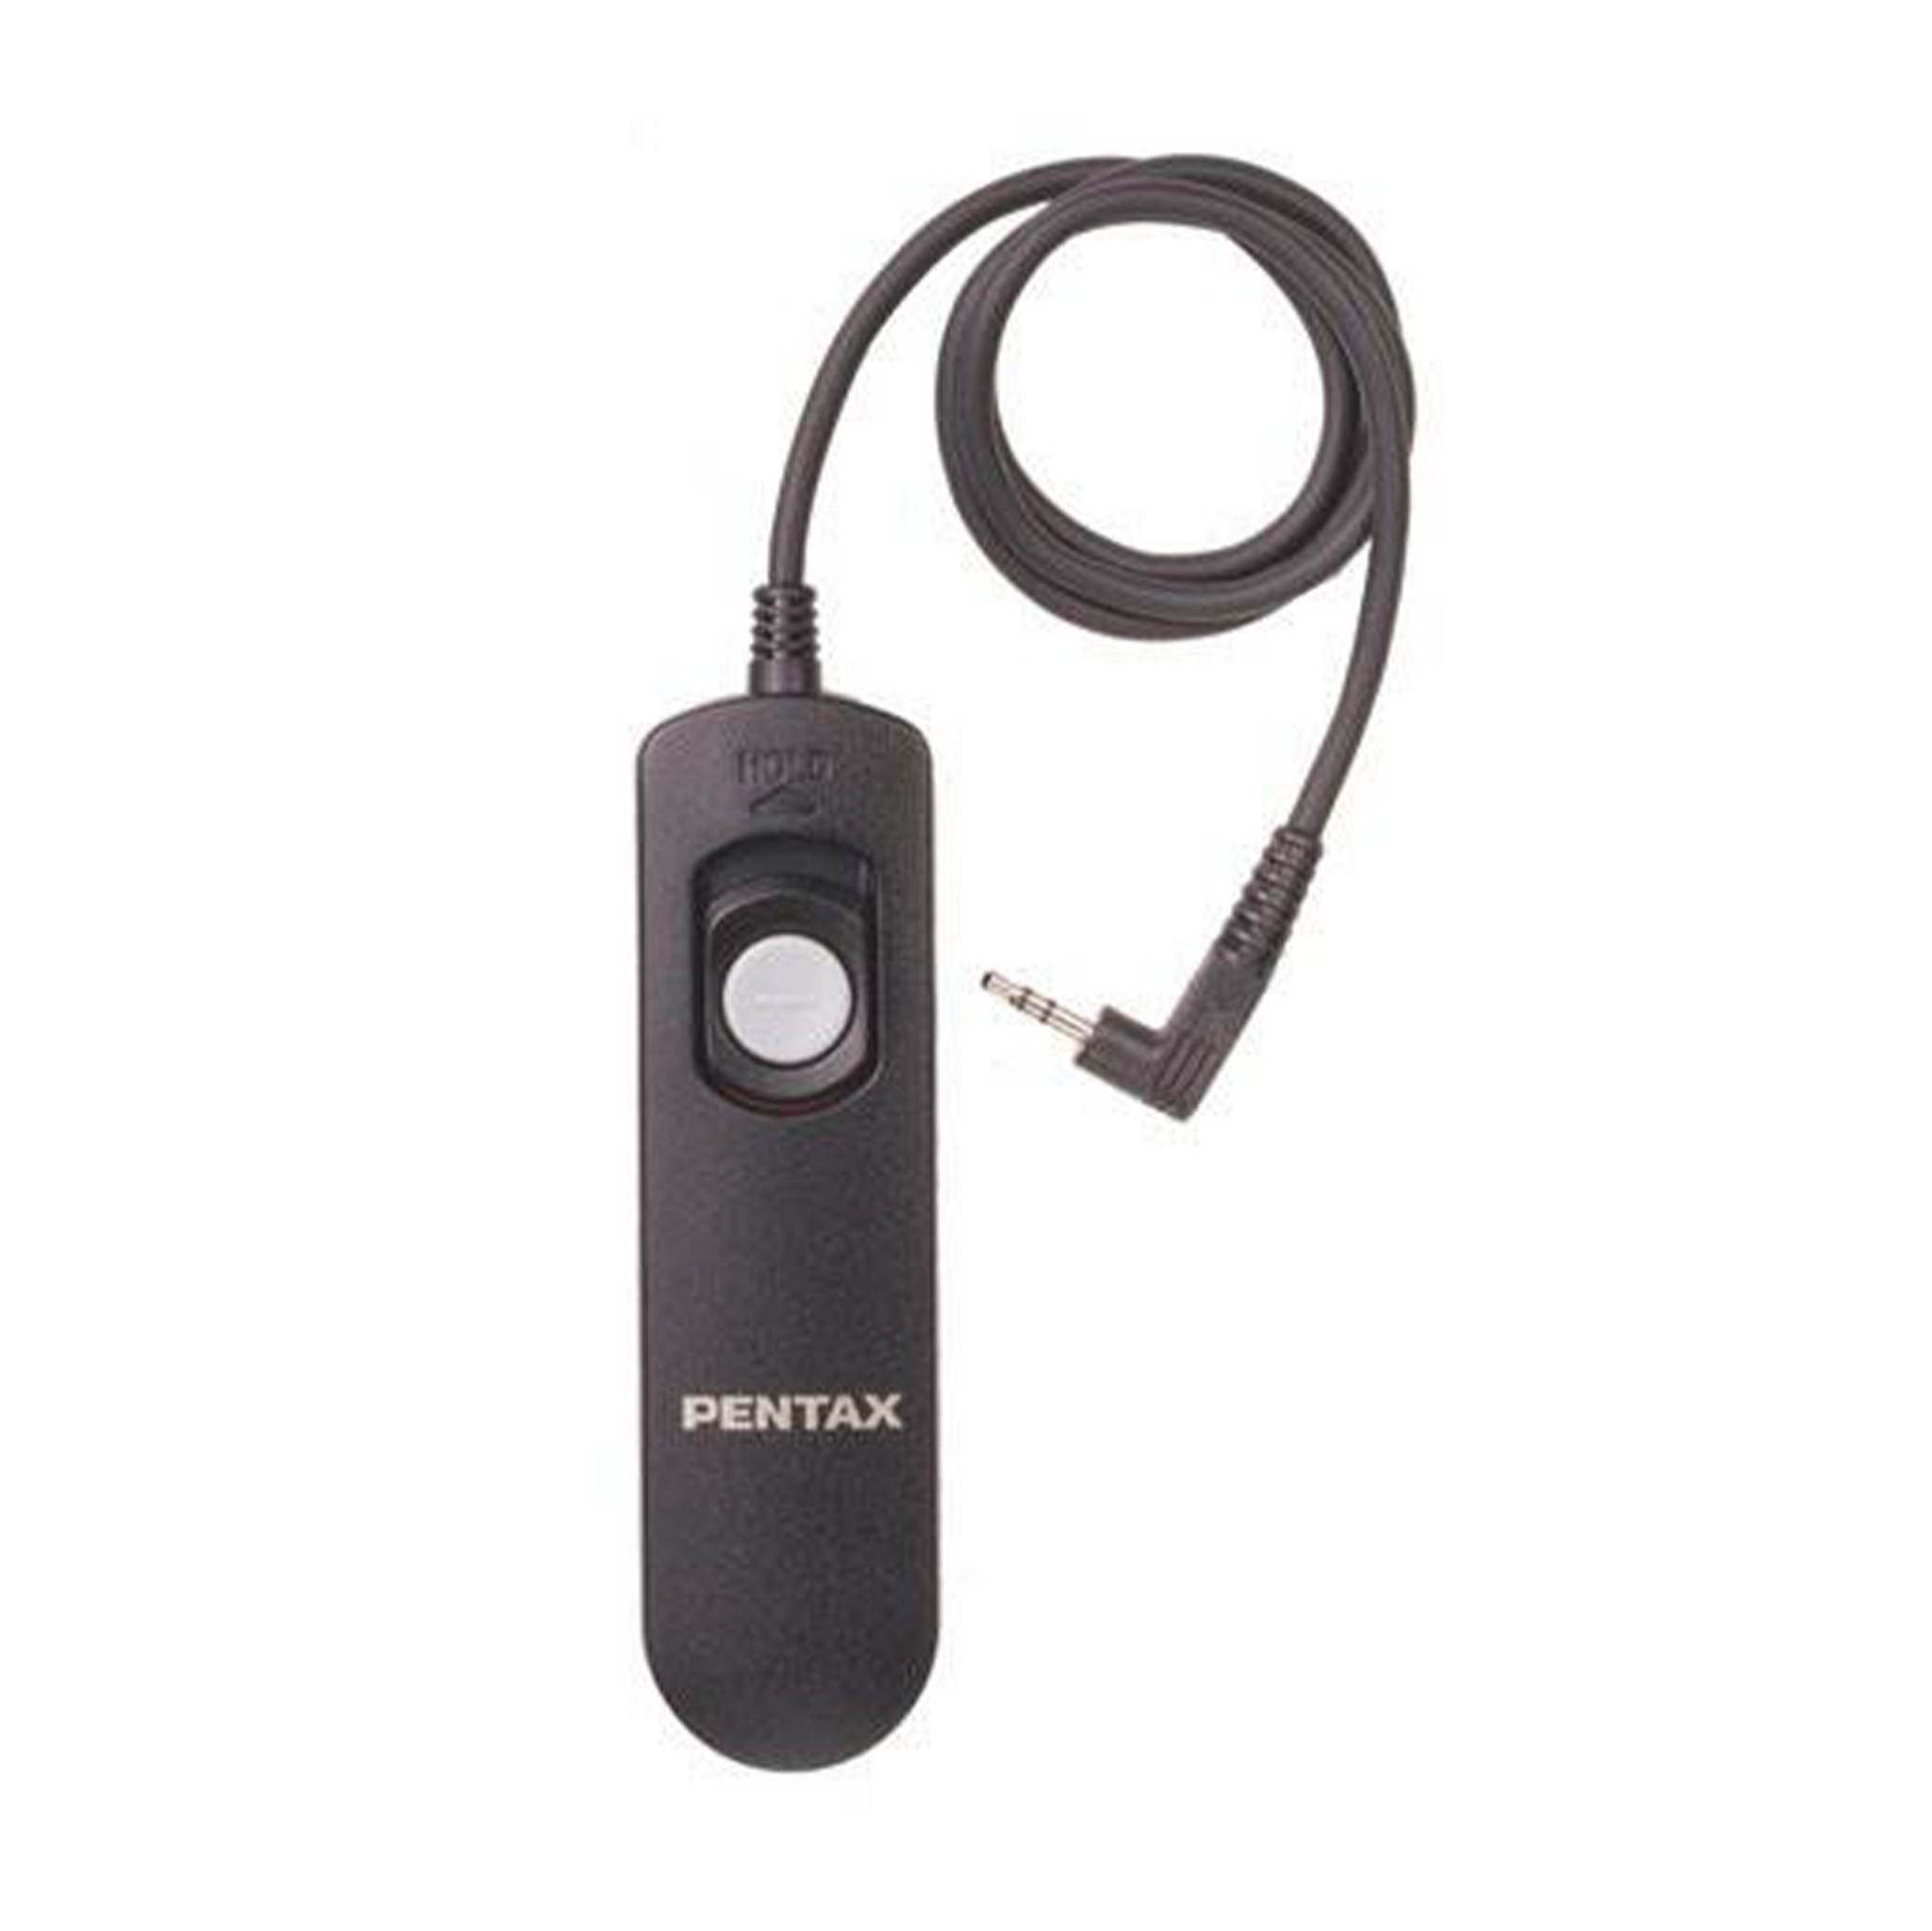 PENTAX CS-205 Cable Release-Camera Accessories-futuromic